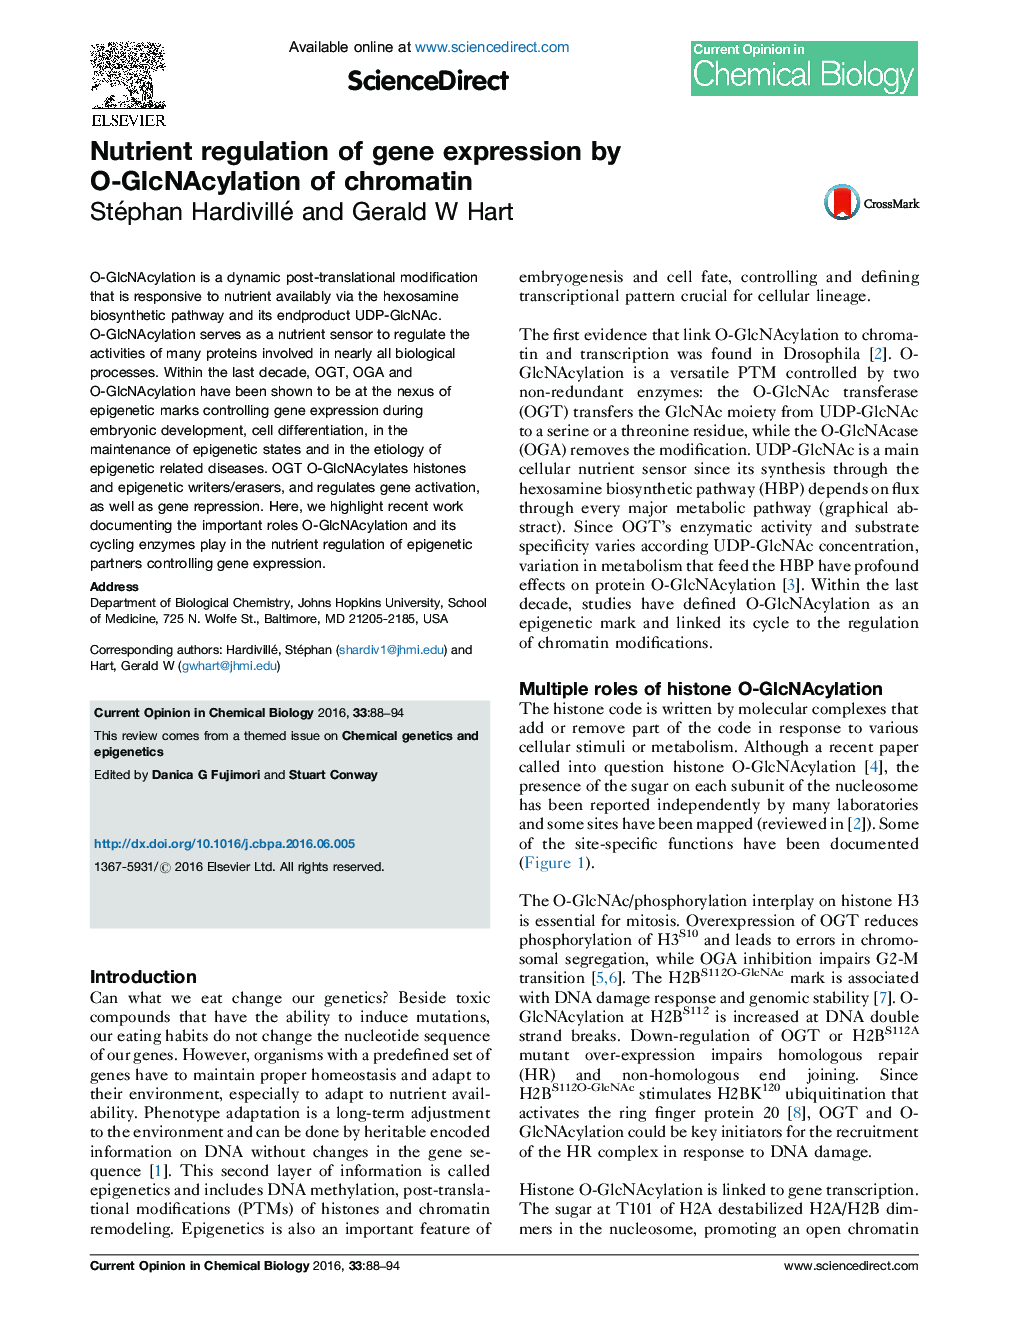 Nutrient regulation of gene expression by O-GlcNAcylation of chromatin